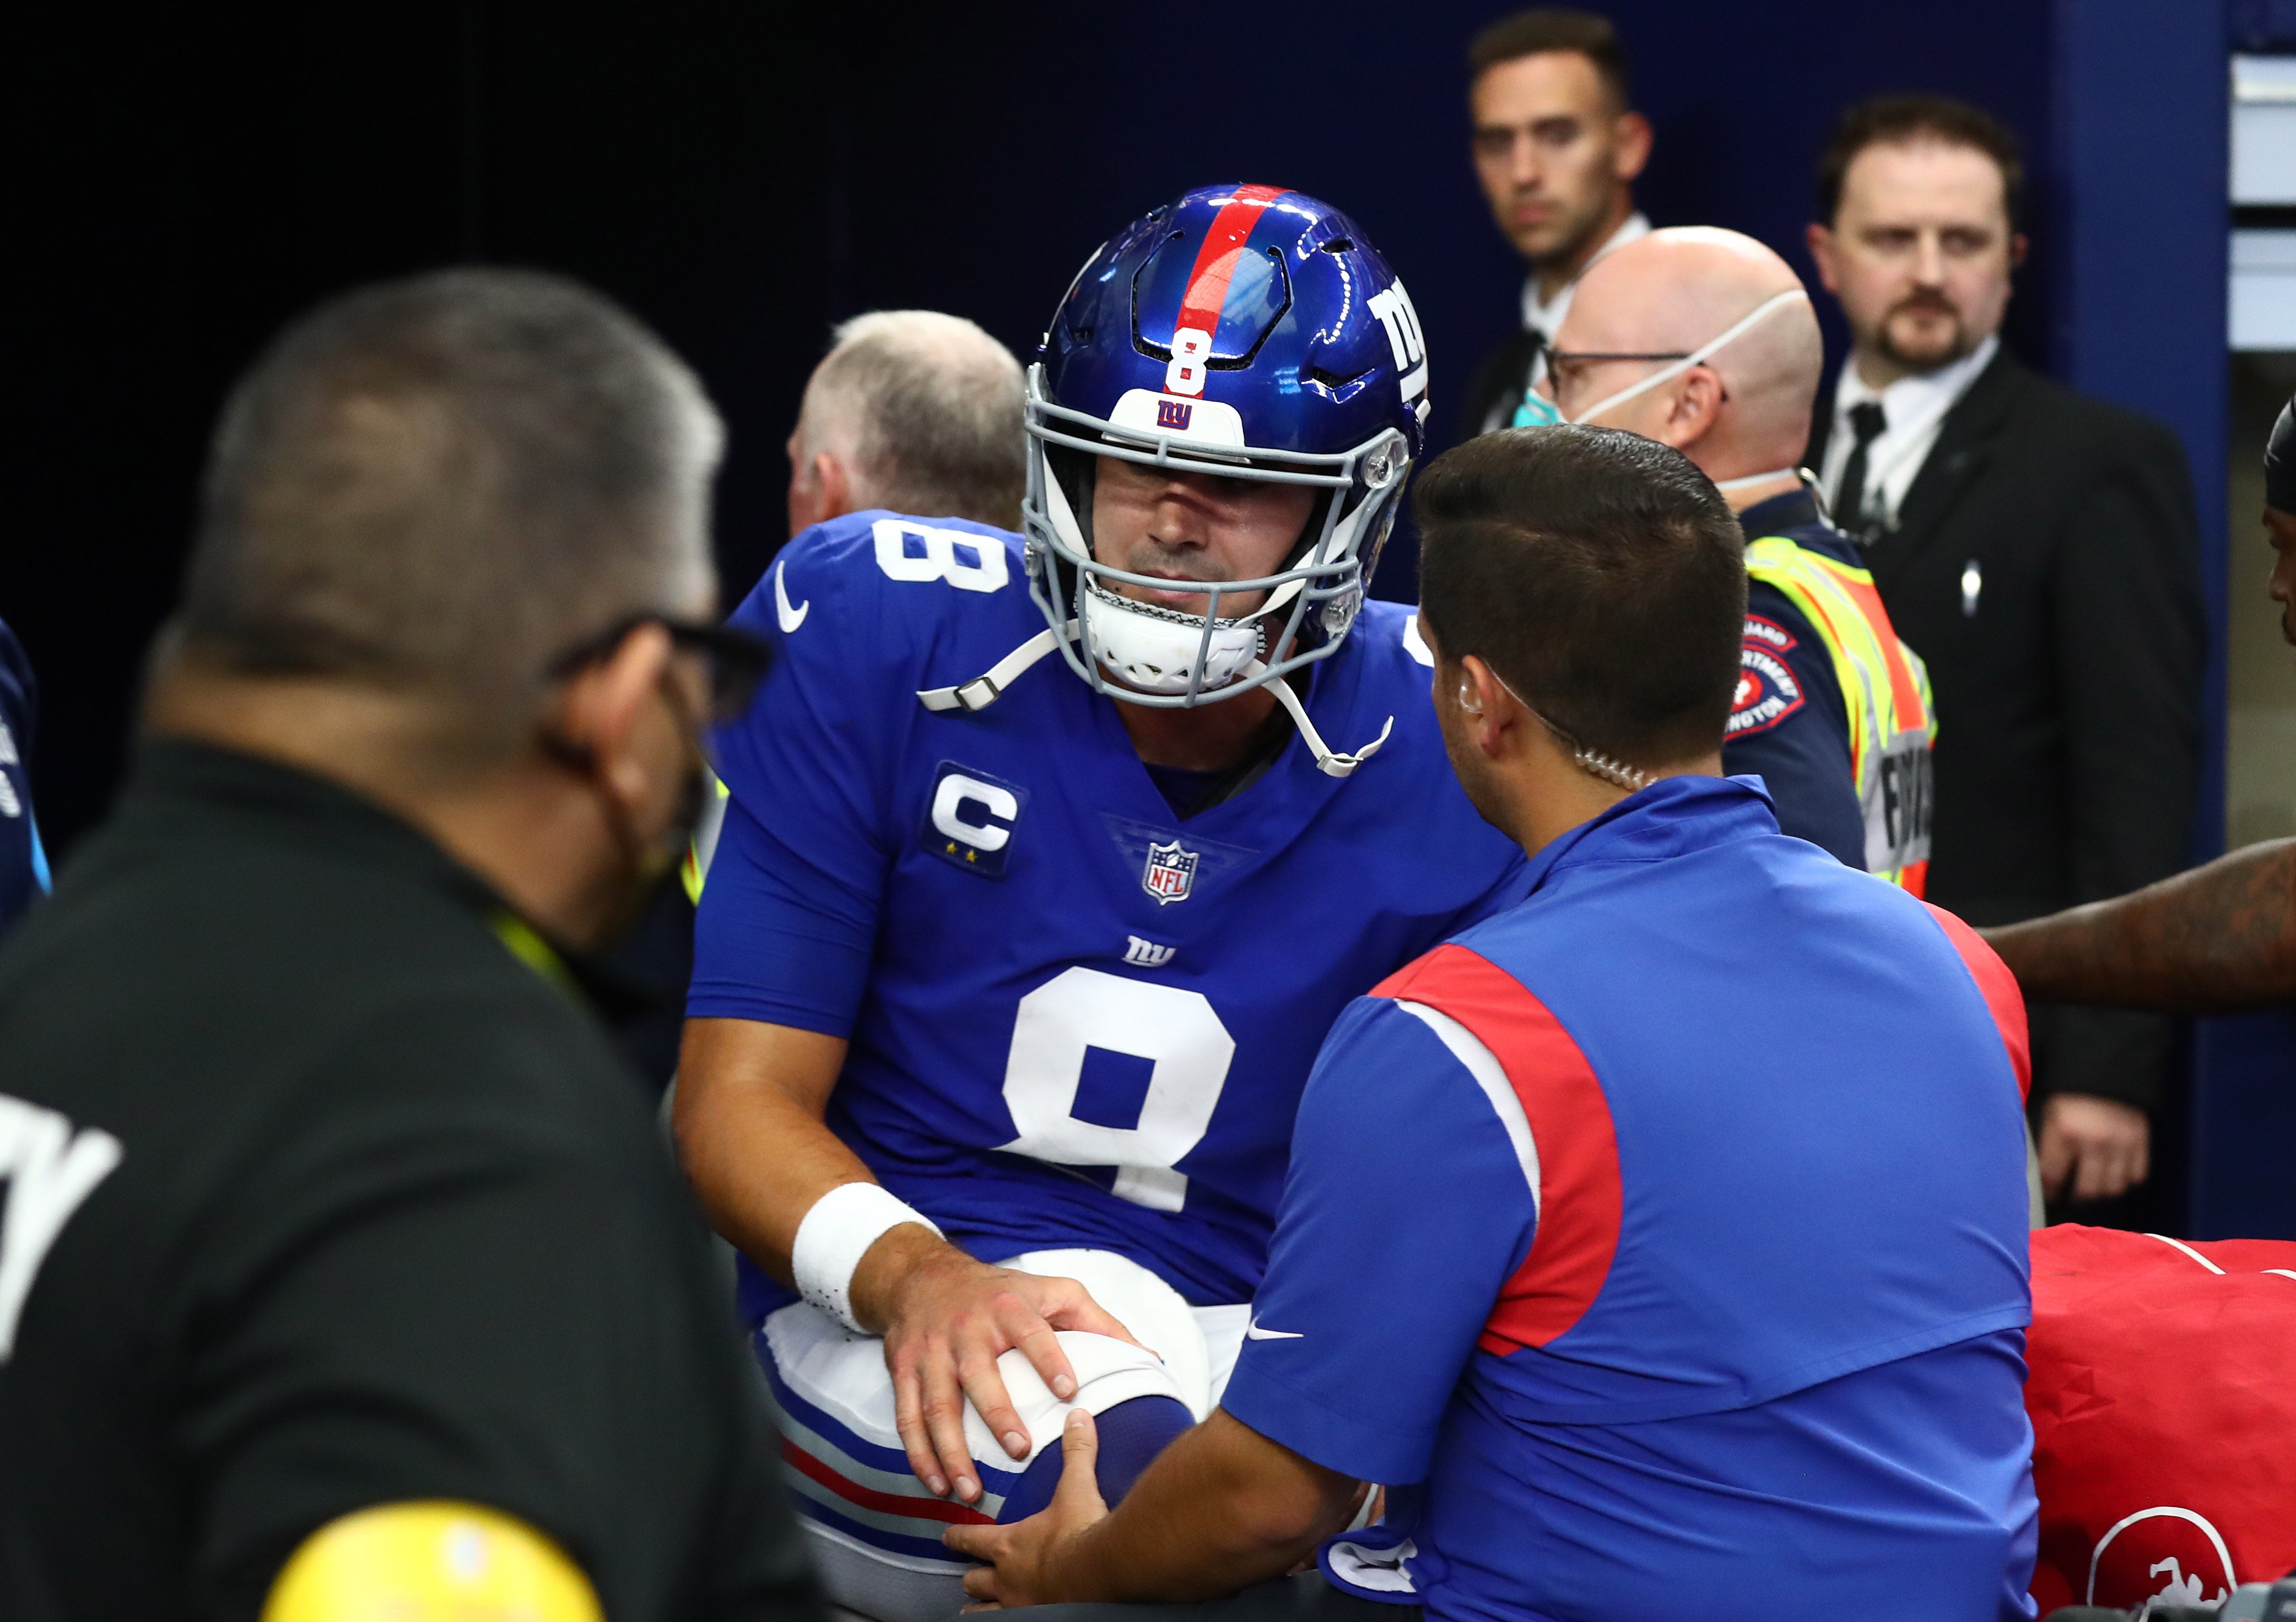 New York Giants quarterback Daniel Jones suffered a concussion last week